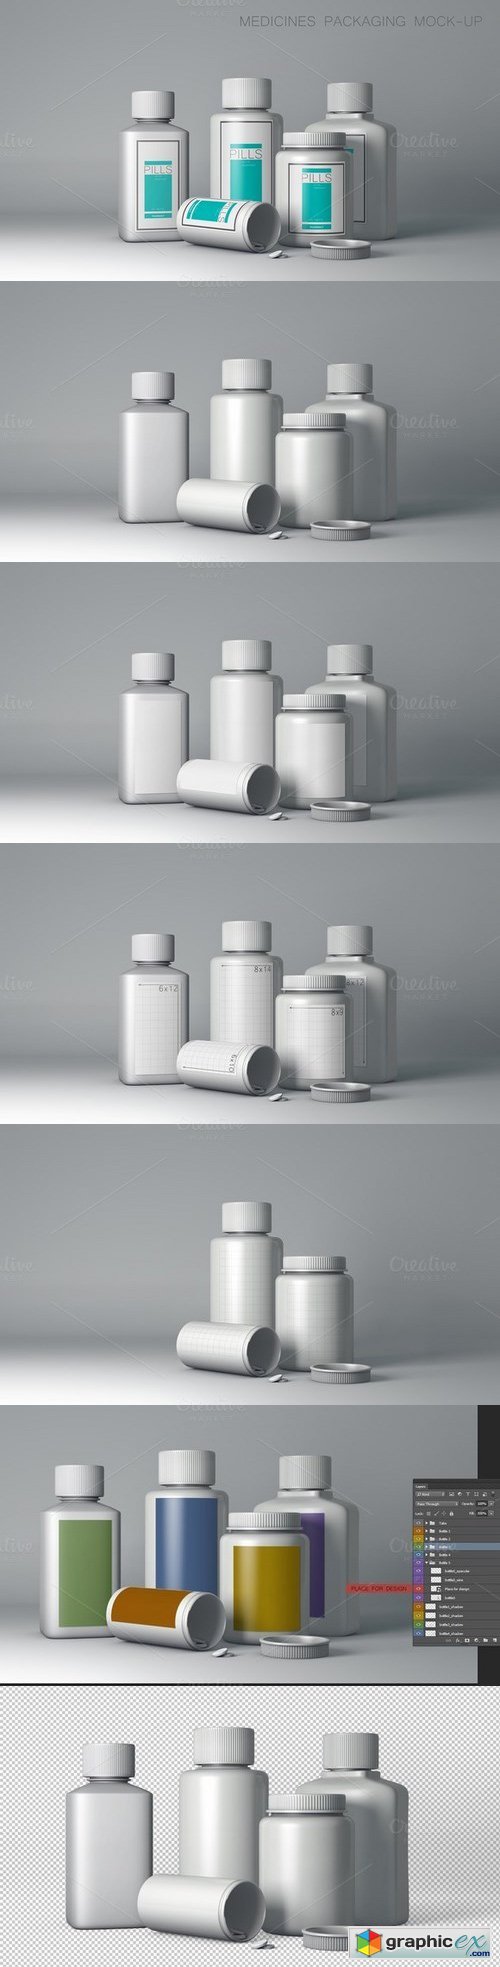 Medicines Packaging Mock-Up